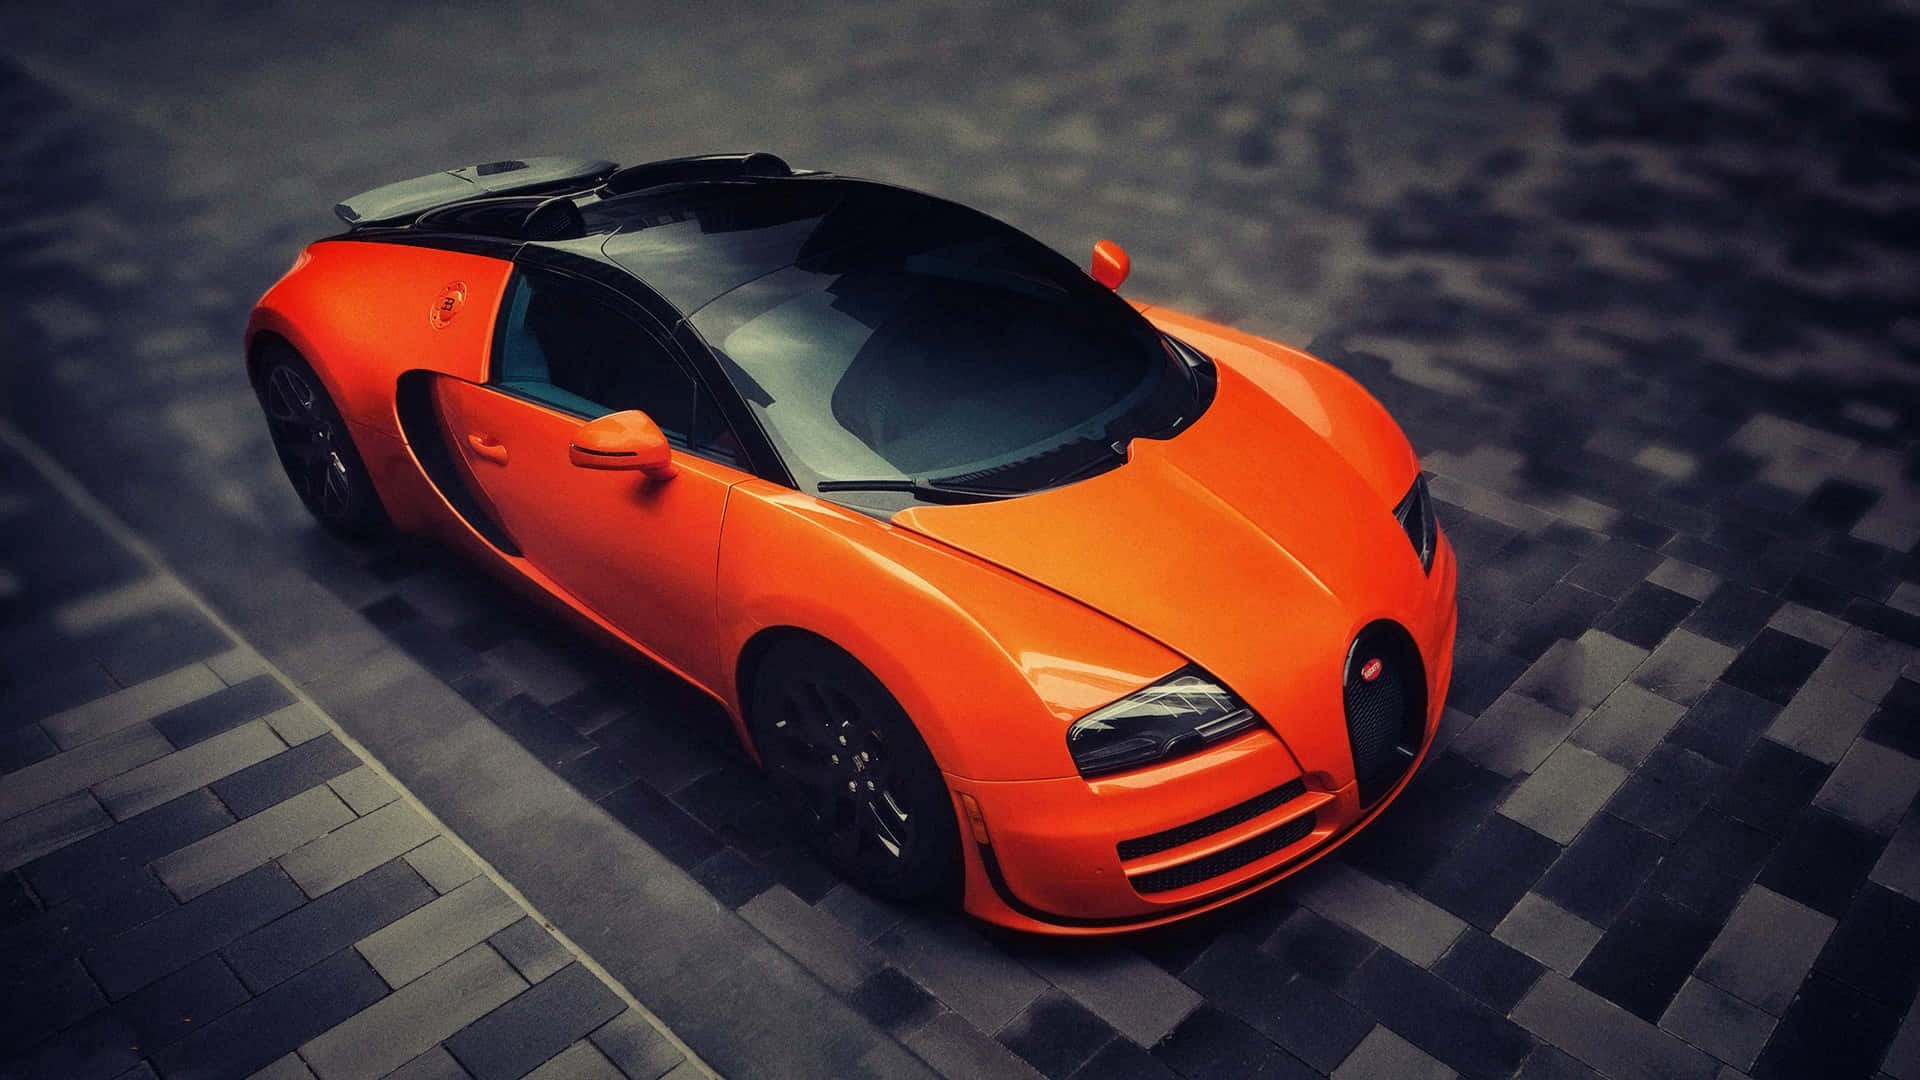 Breathtaking Bugatti Veyron in Action Wallpaper